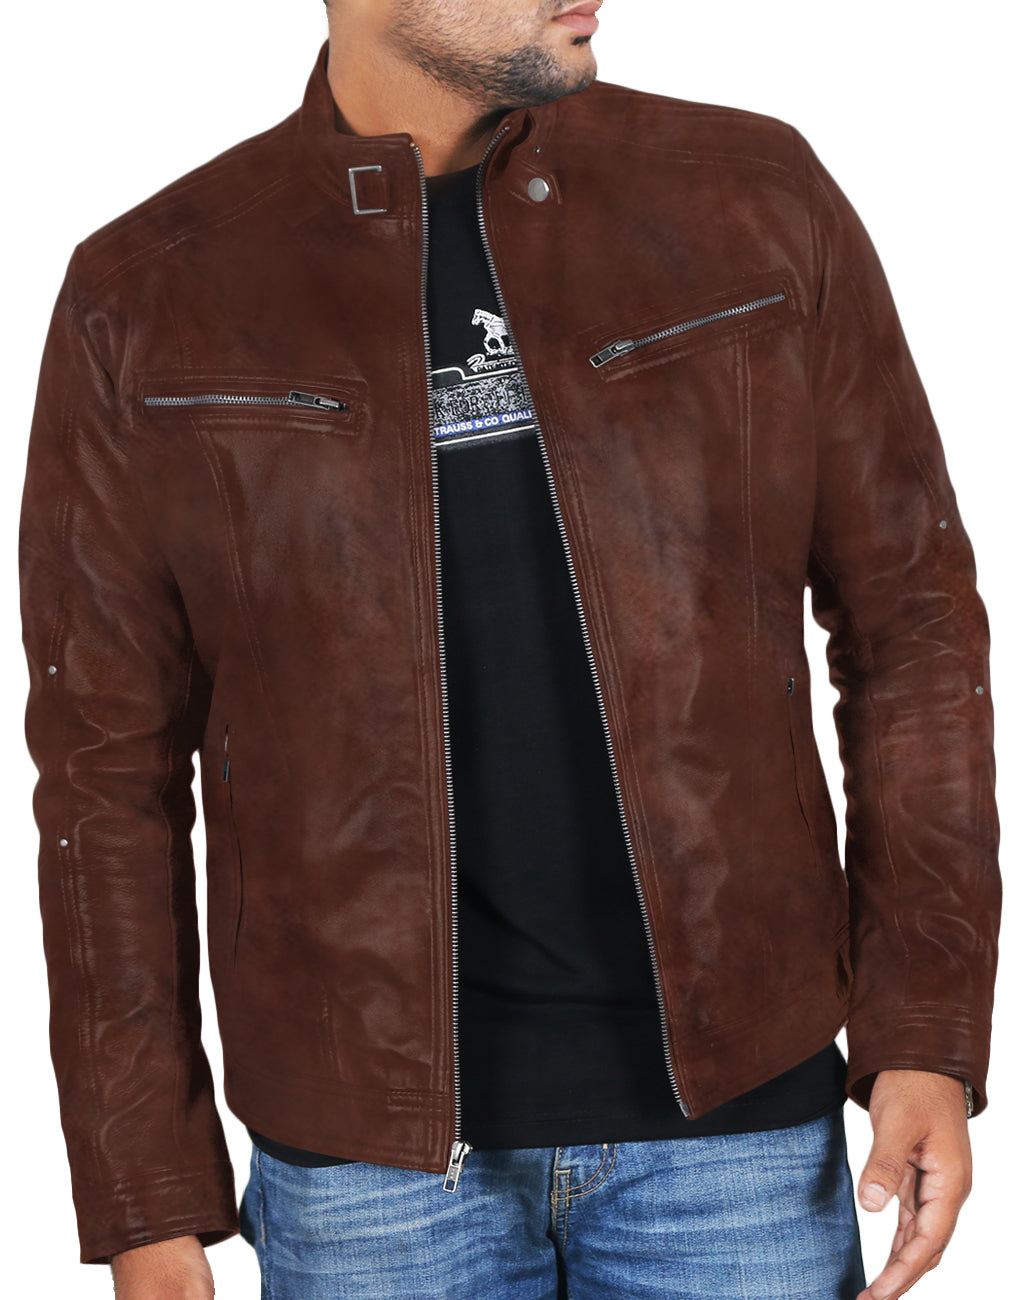 Leather Jackets Hub Mens Genuine Lambskin Leather Jacket (Black, Fencing Jacket) - 1501161